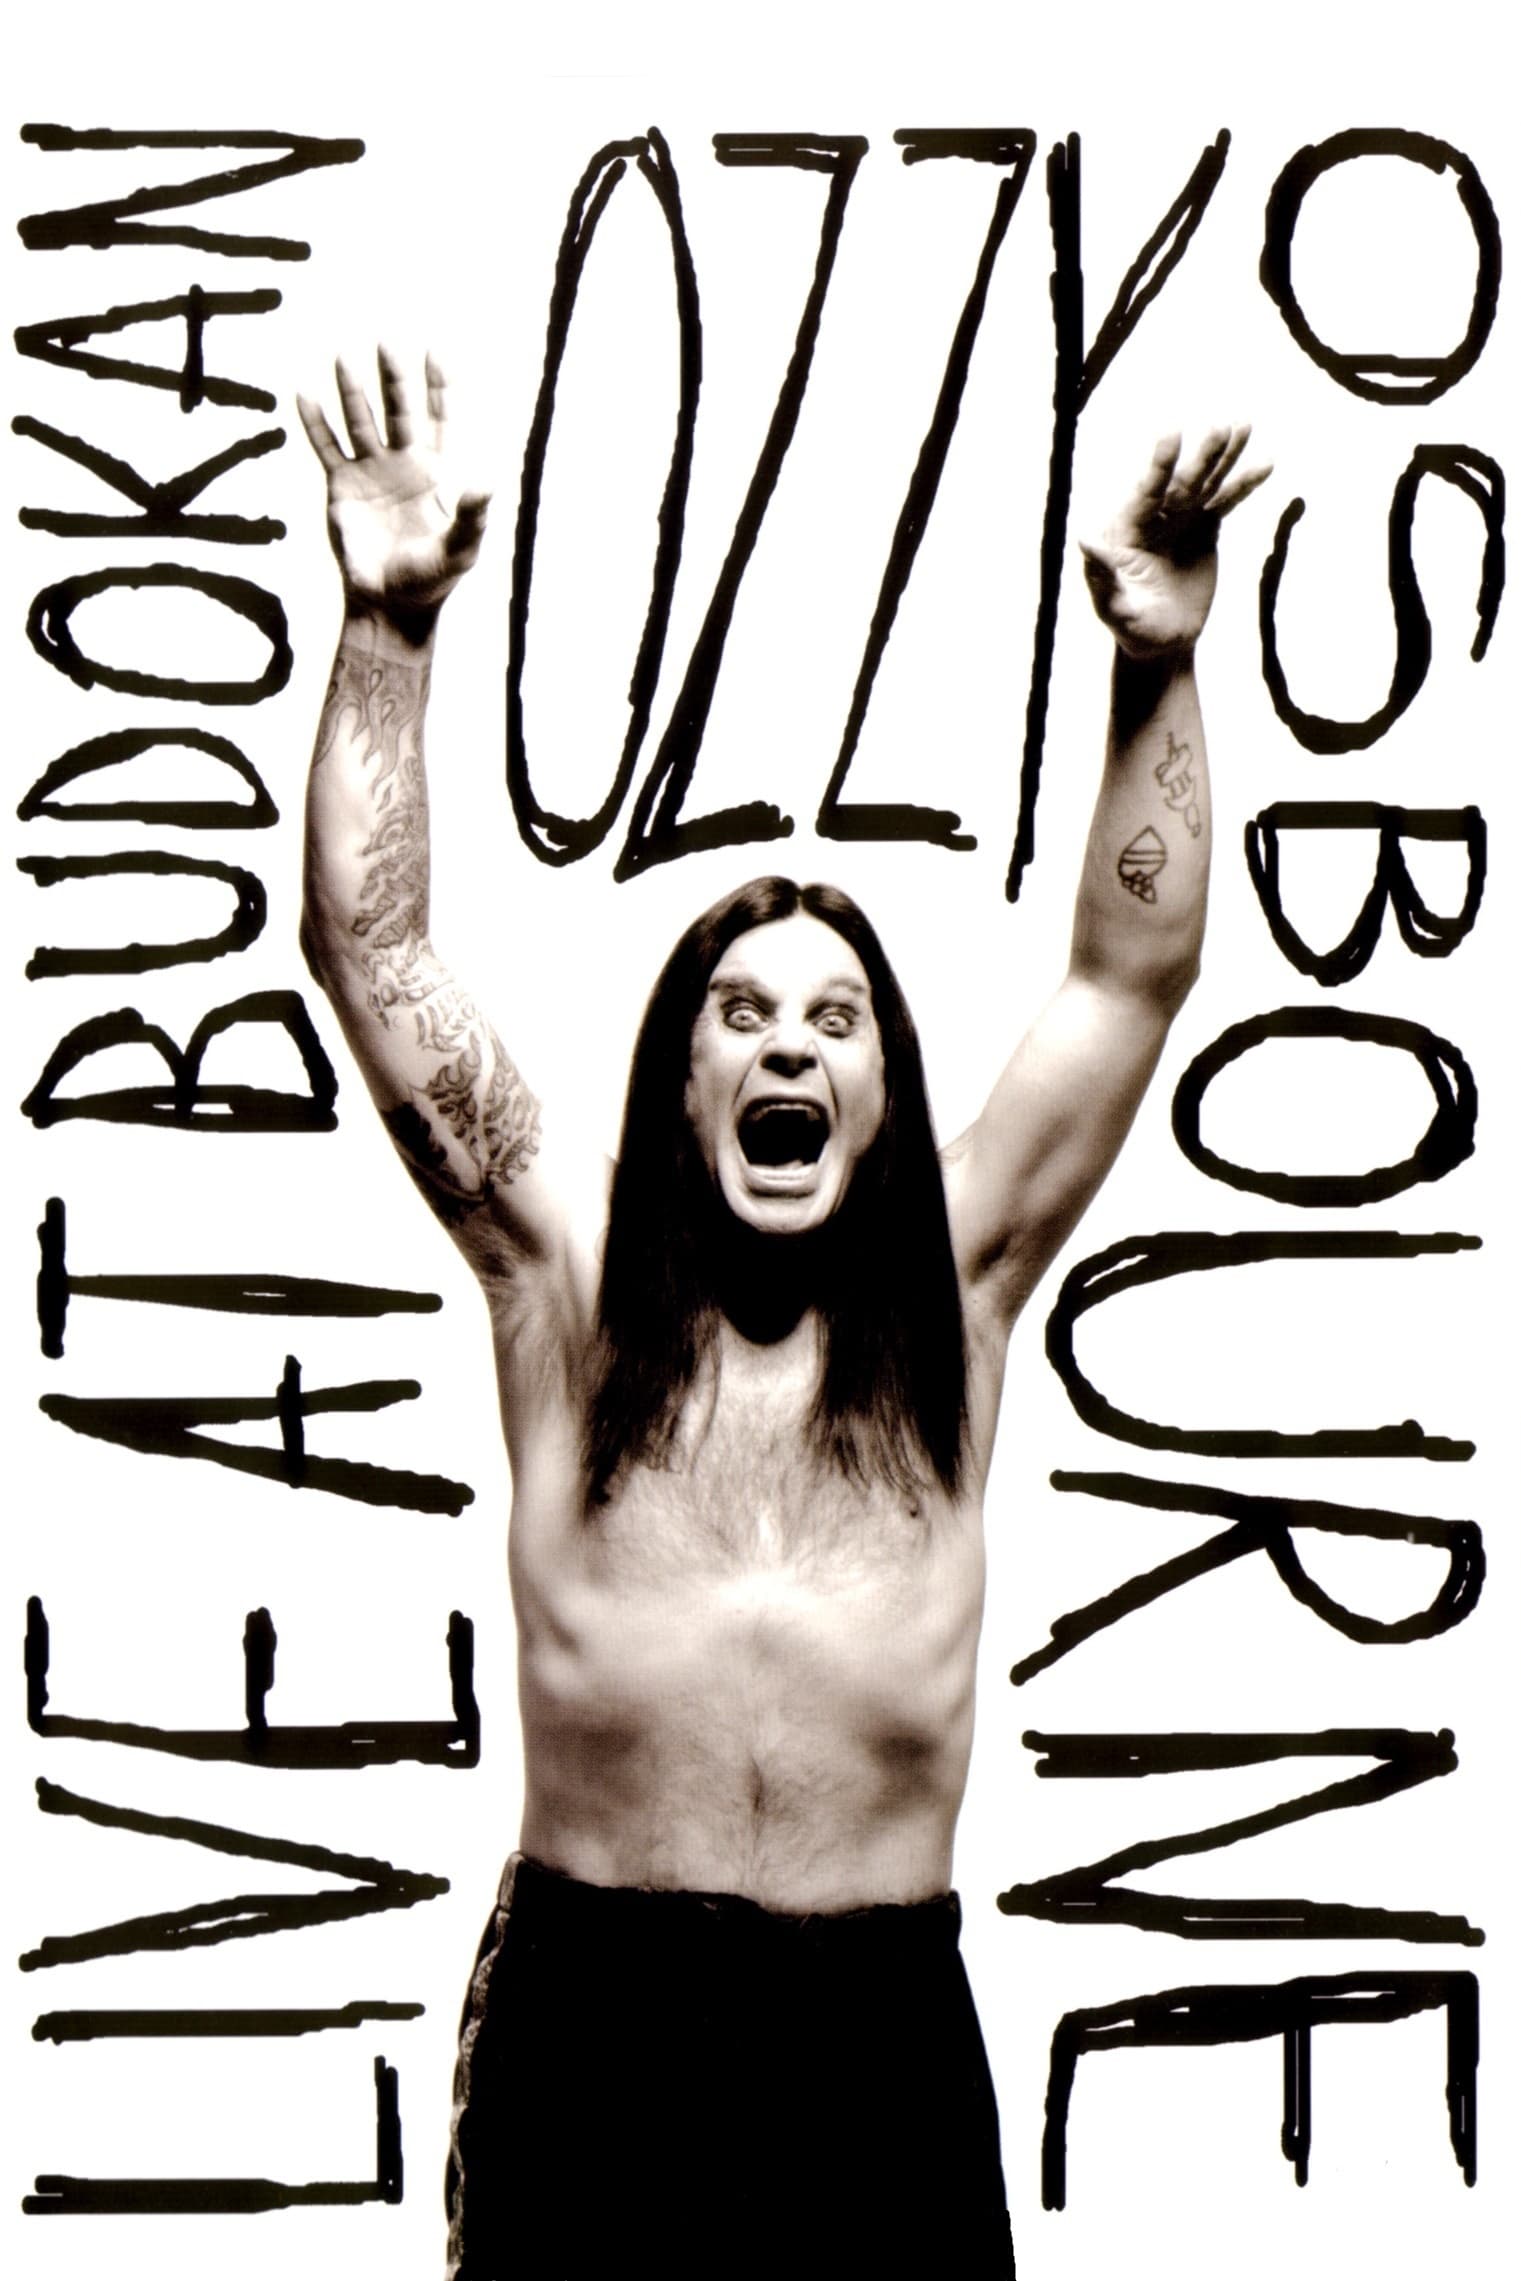 Ozzy Osbourne: Live at Budokan